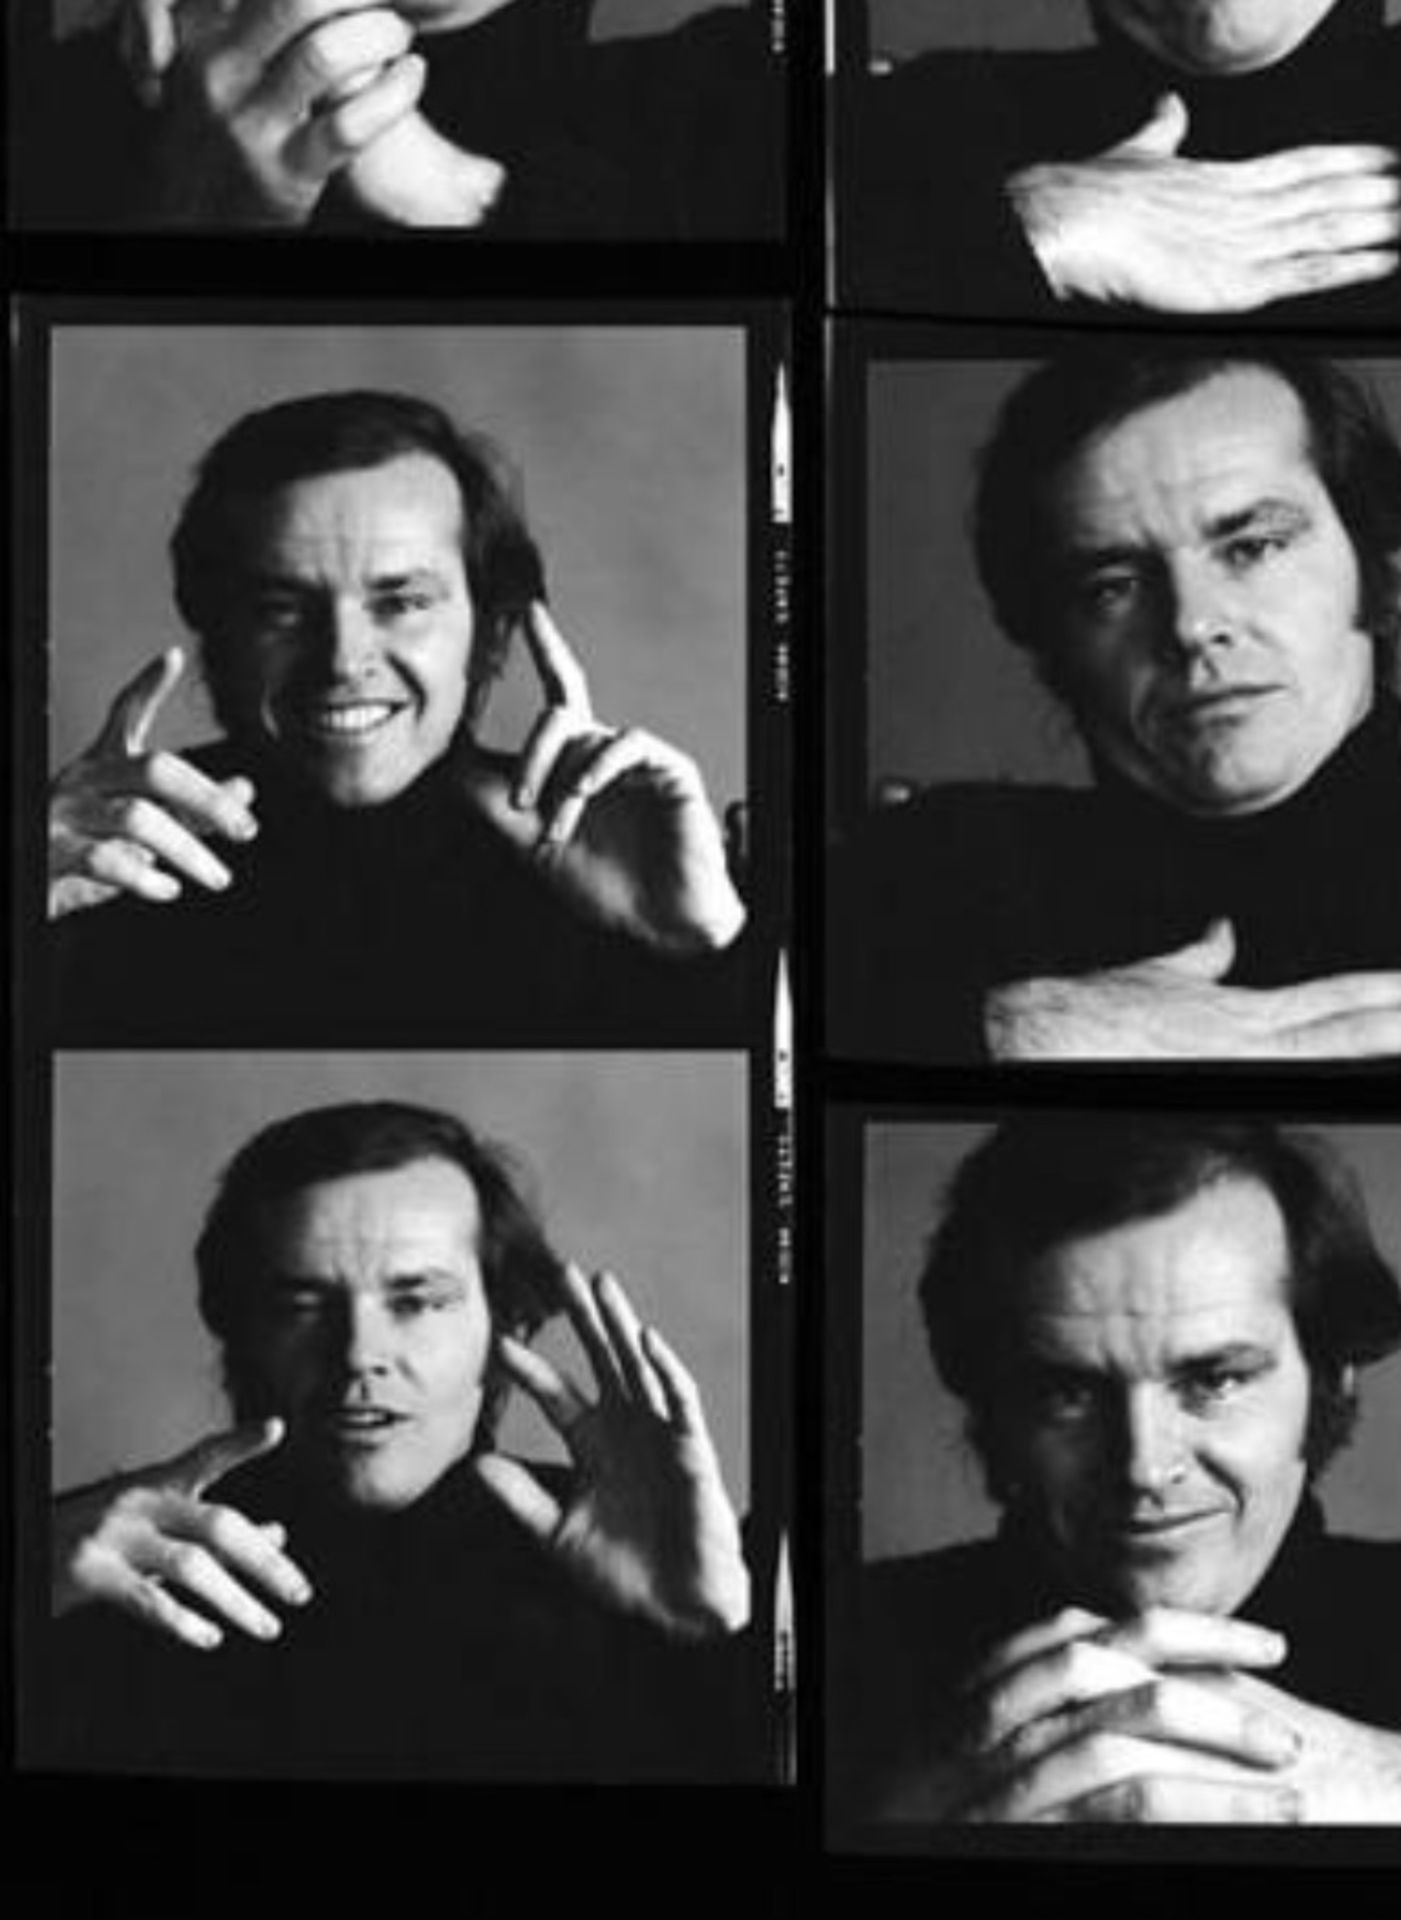 Jack Robinson "Jack Nicholson, New York, 1970" Contact Sheet - Image 3 of 5